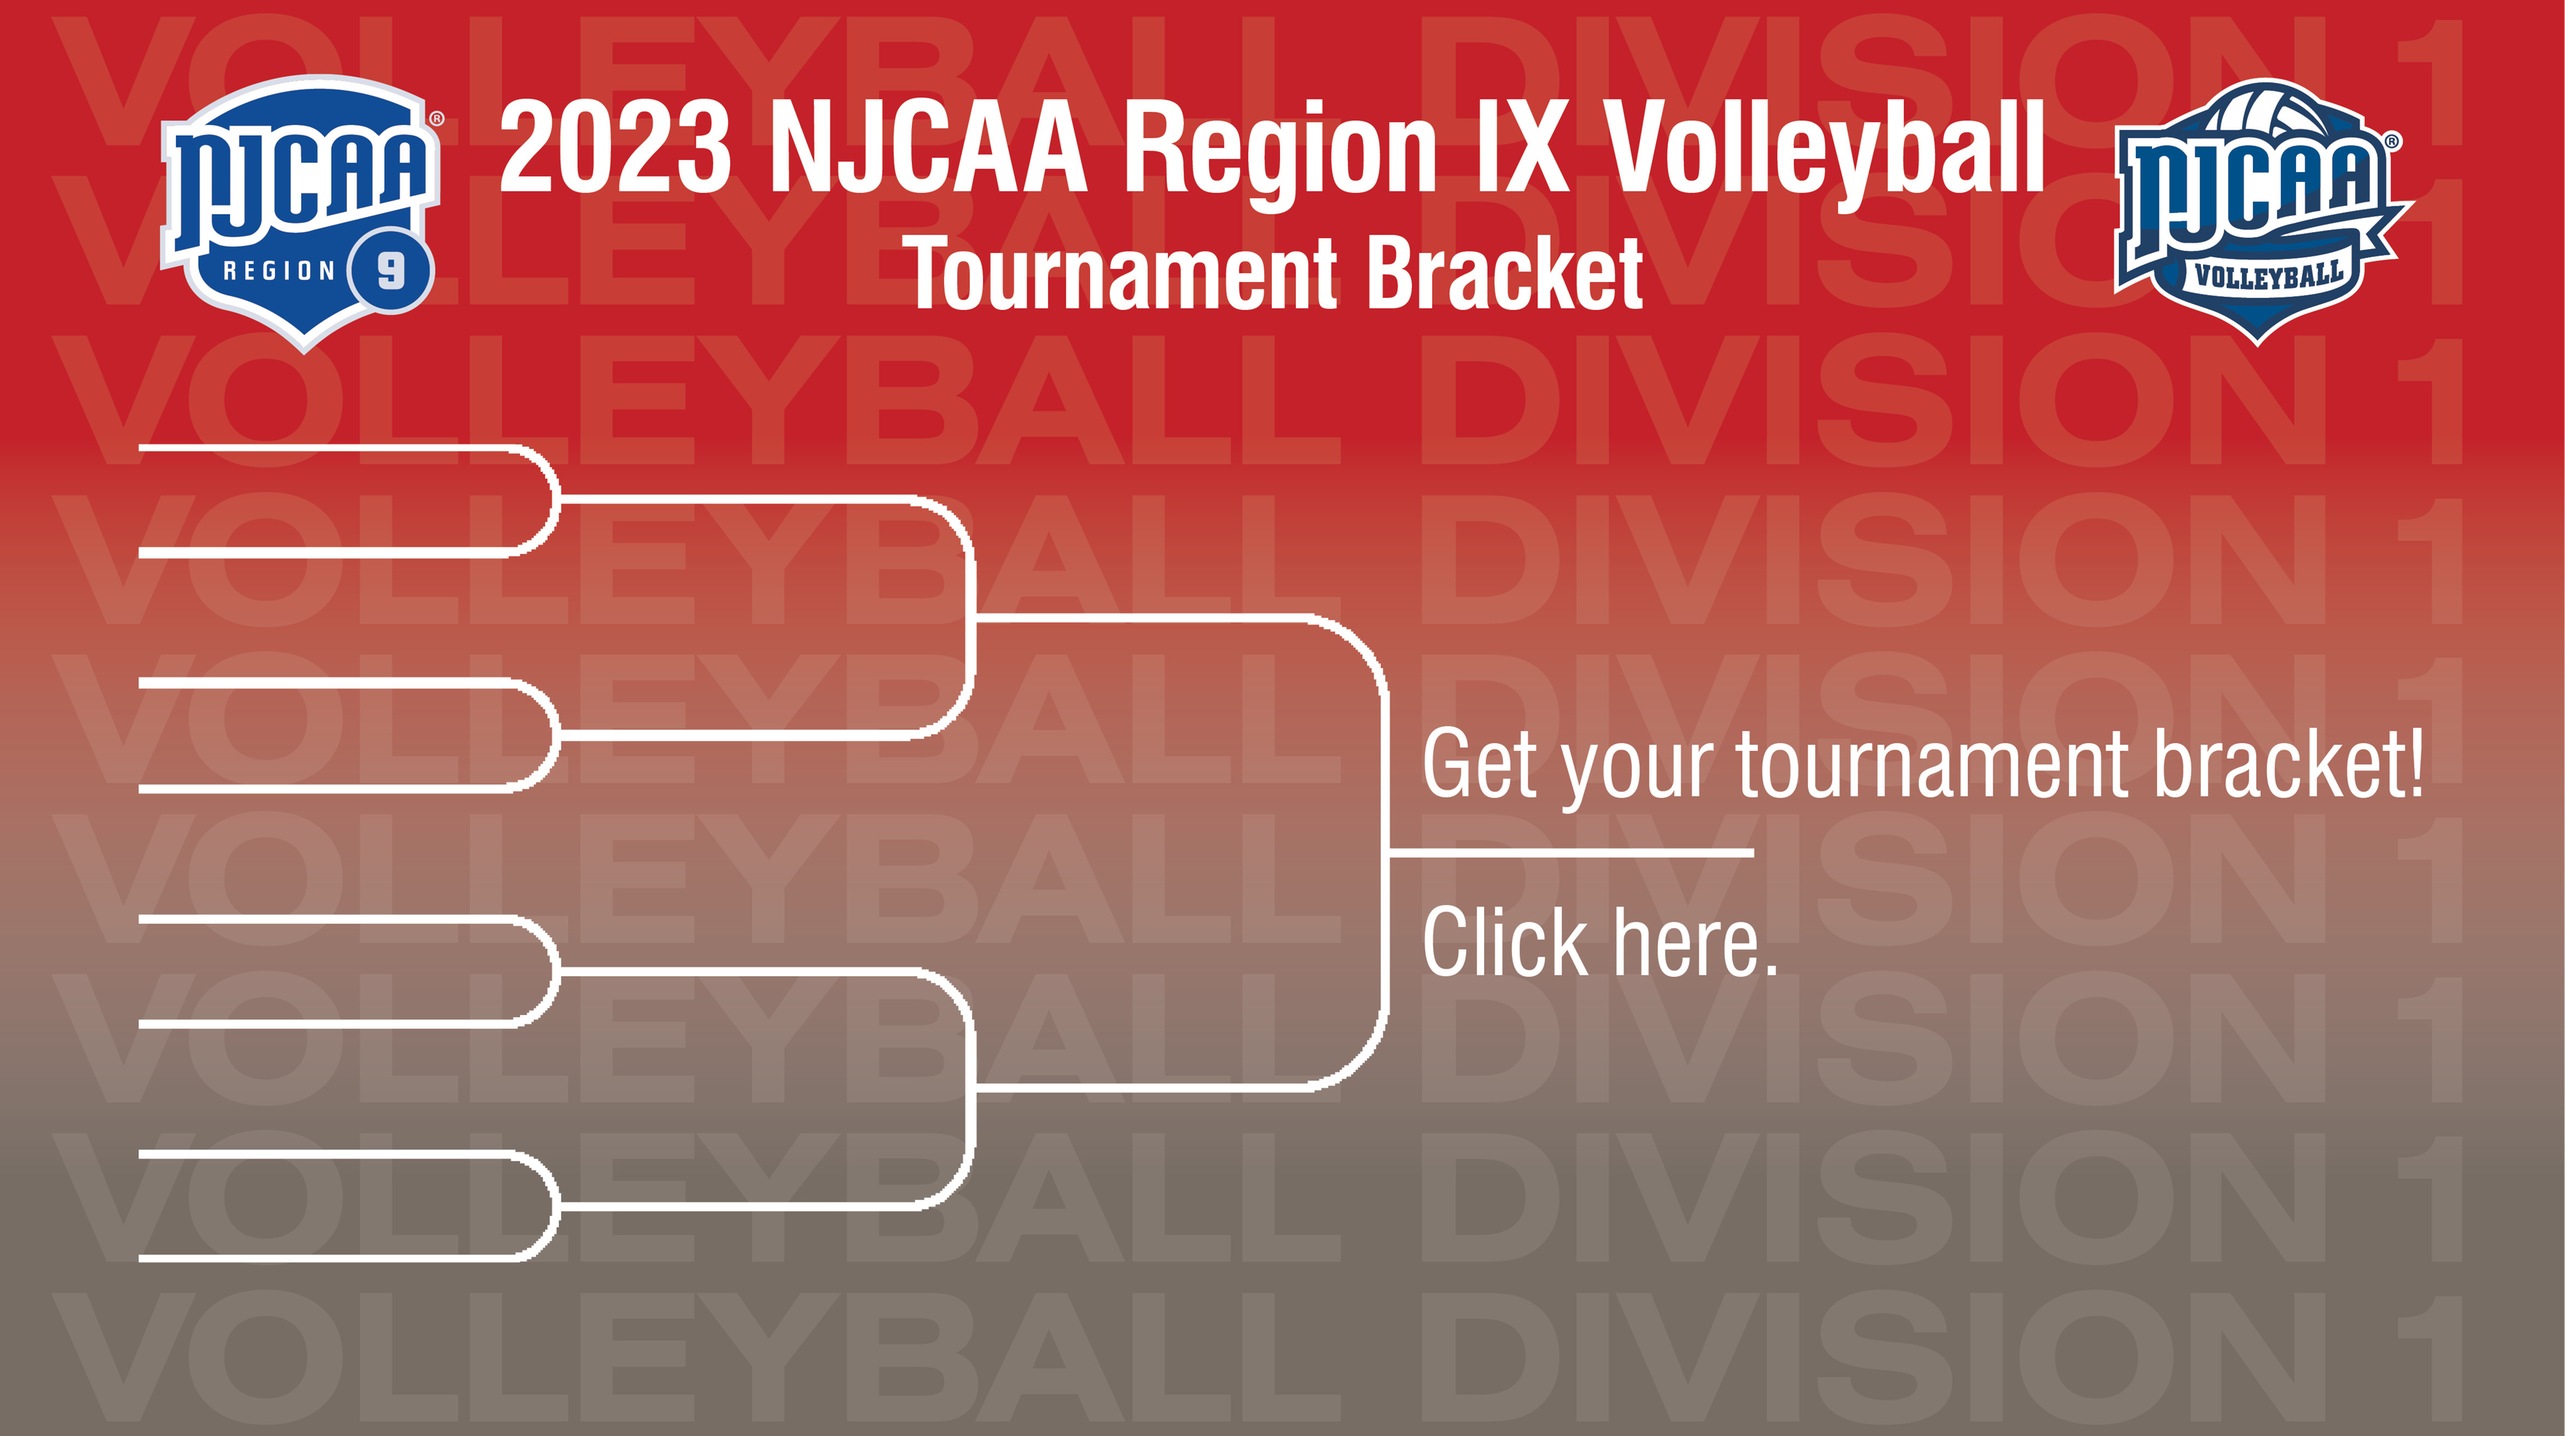 2023 NJCAA Region IX Volleyball Tournament Bracket